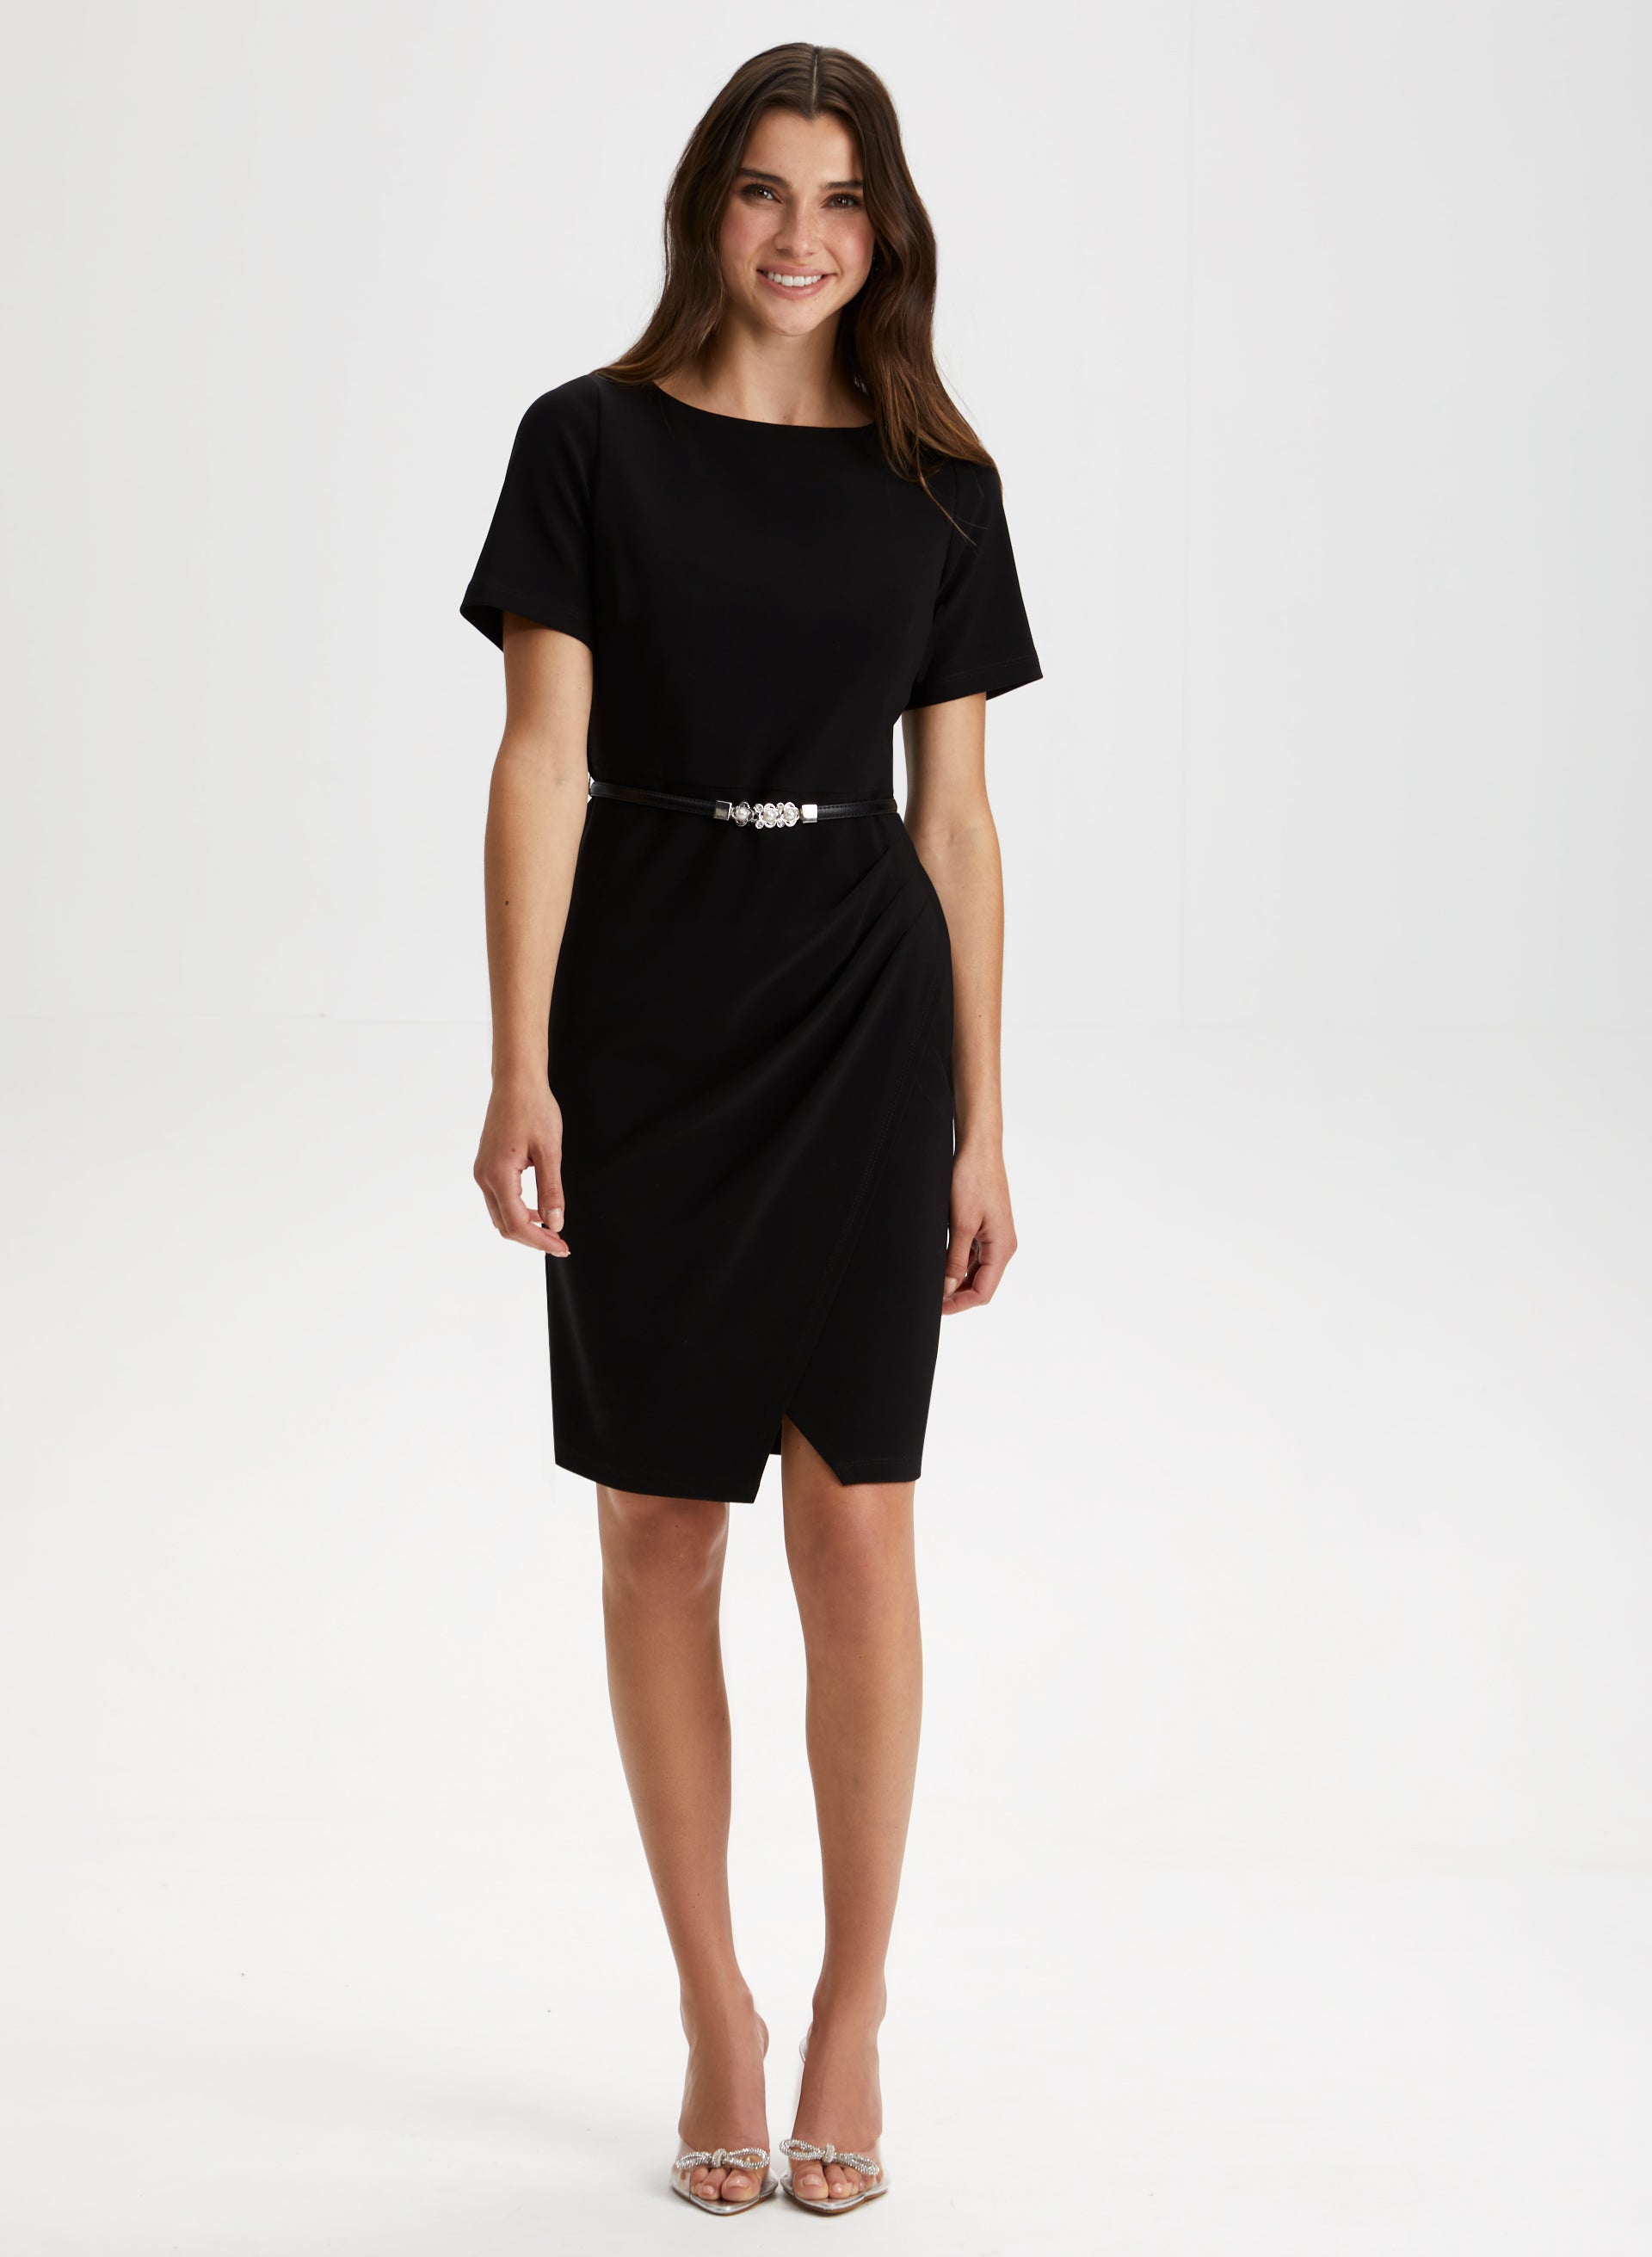 Beaucaire Black | Short Dress w/ Thin Straps